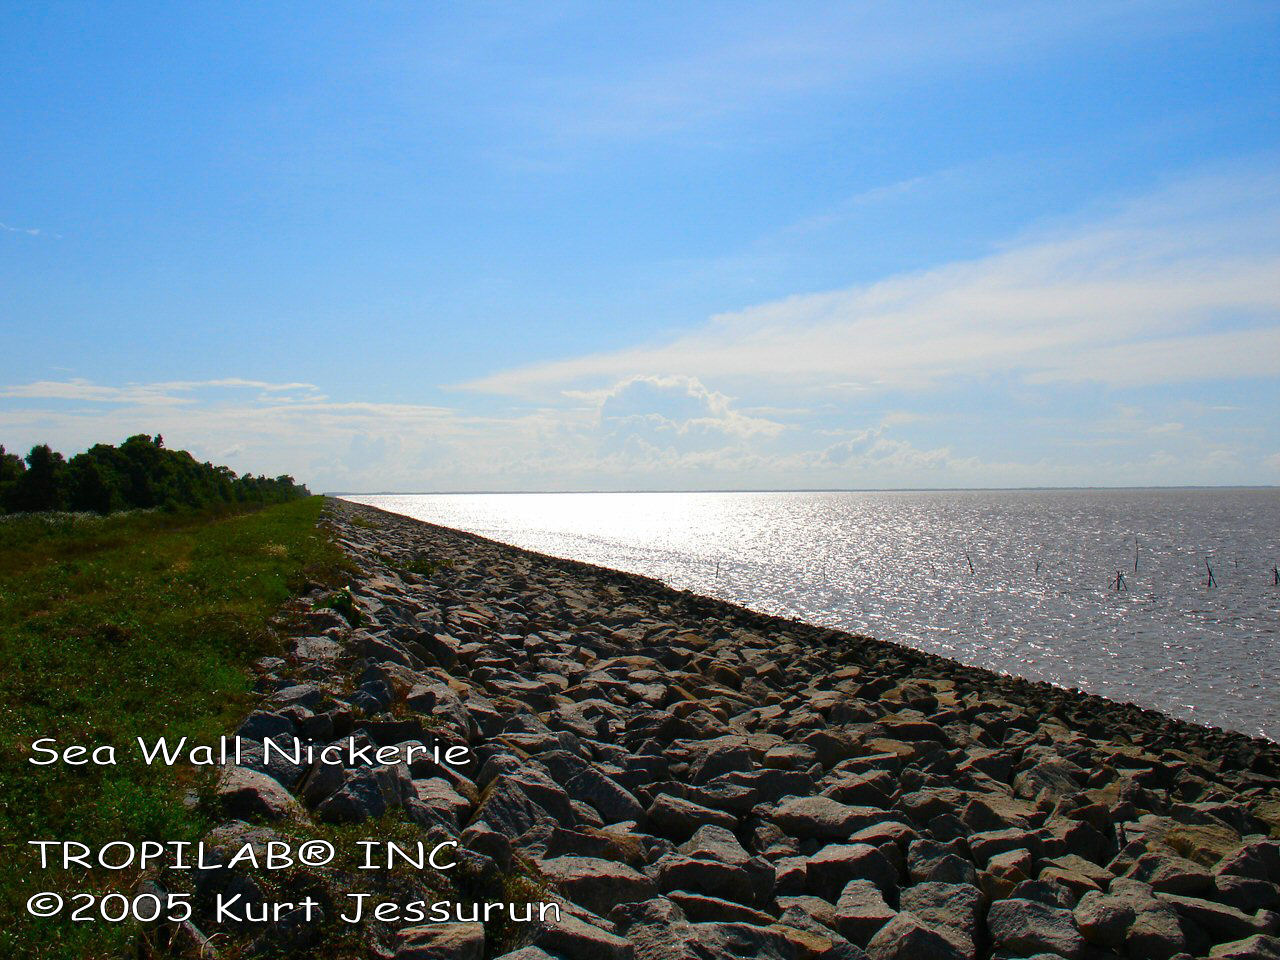 Sea wall Nickerie